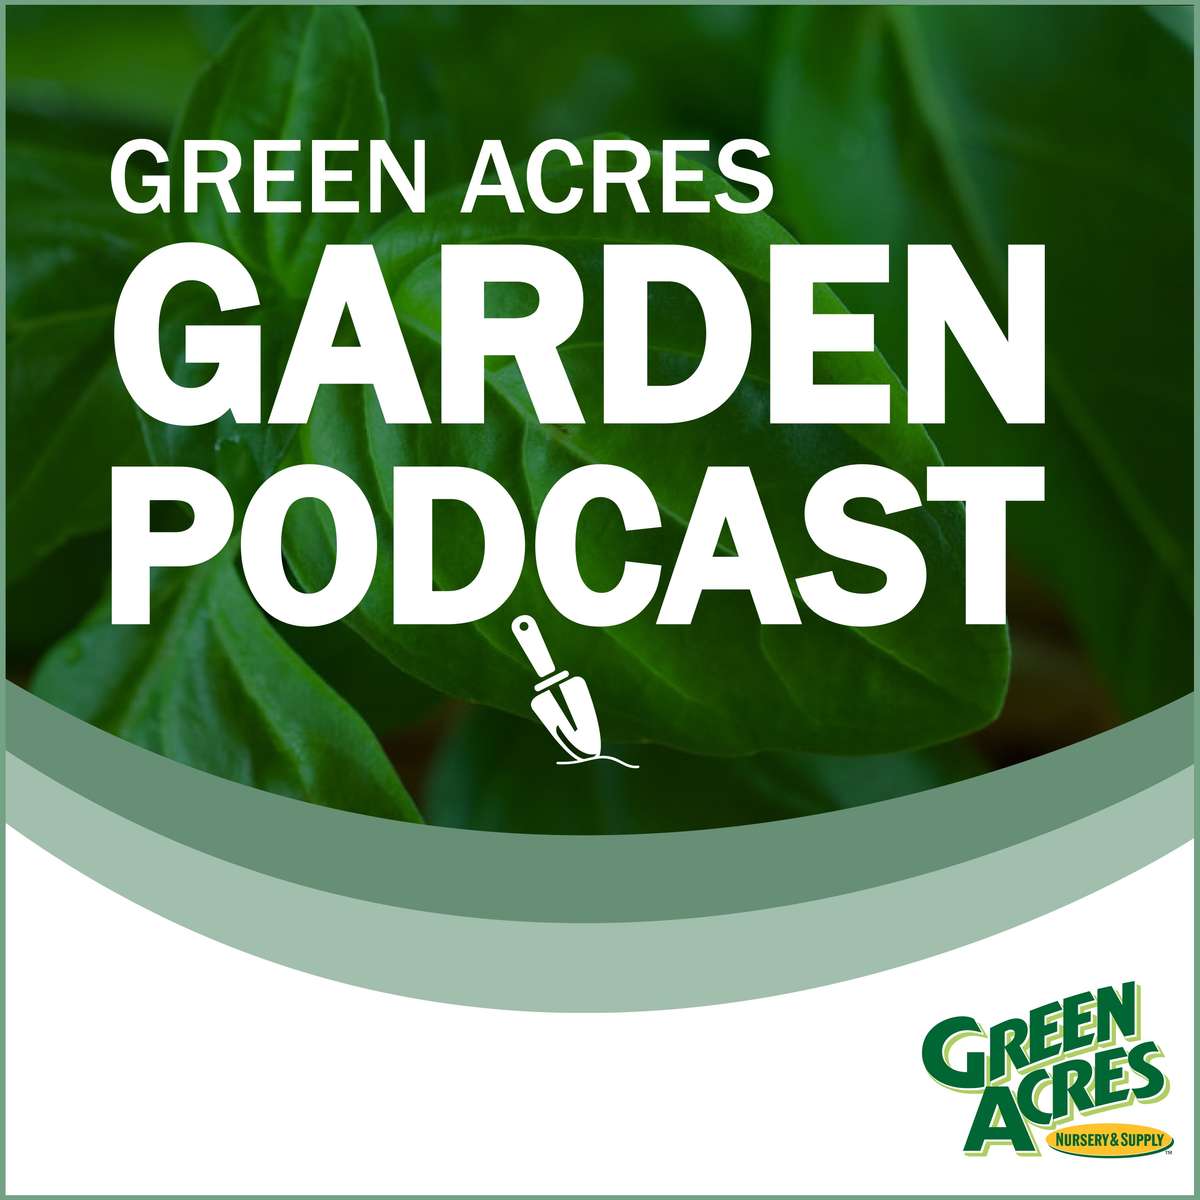 Green Acres Garden Podcast cover art